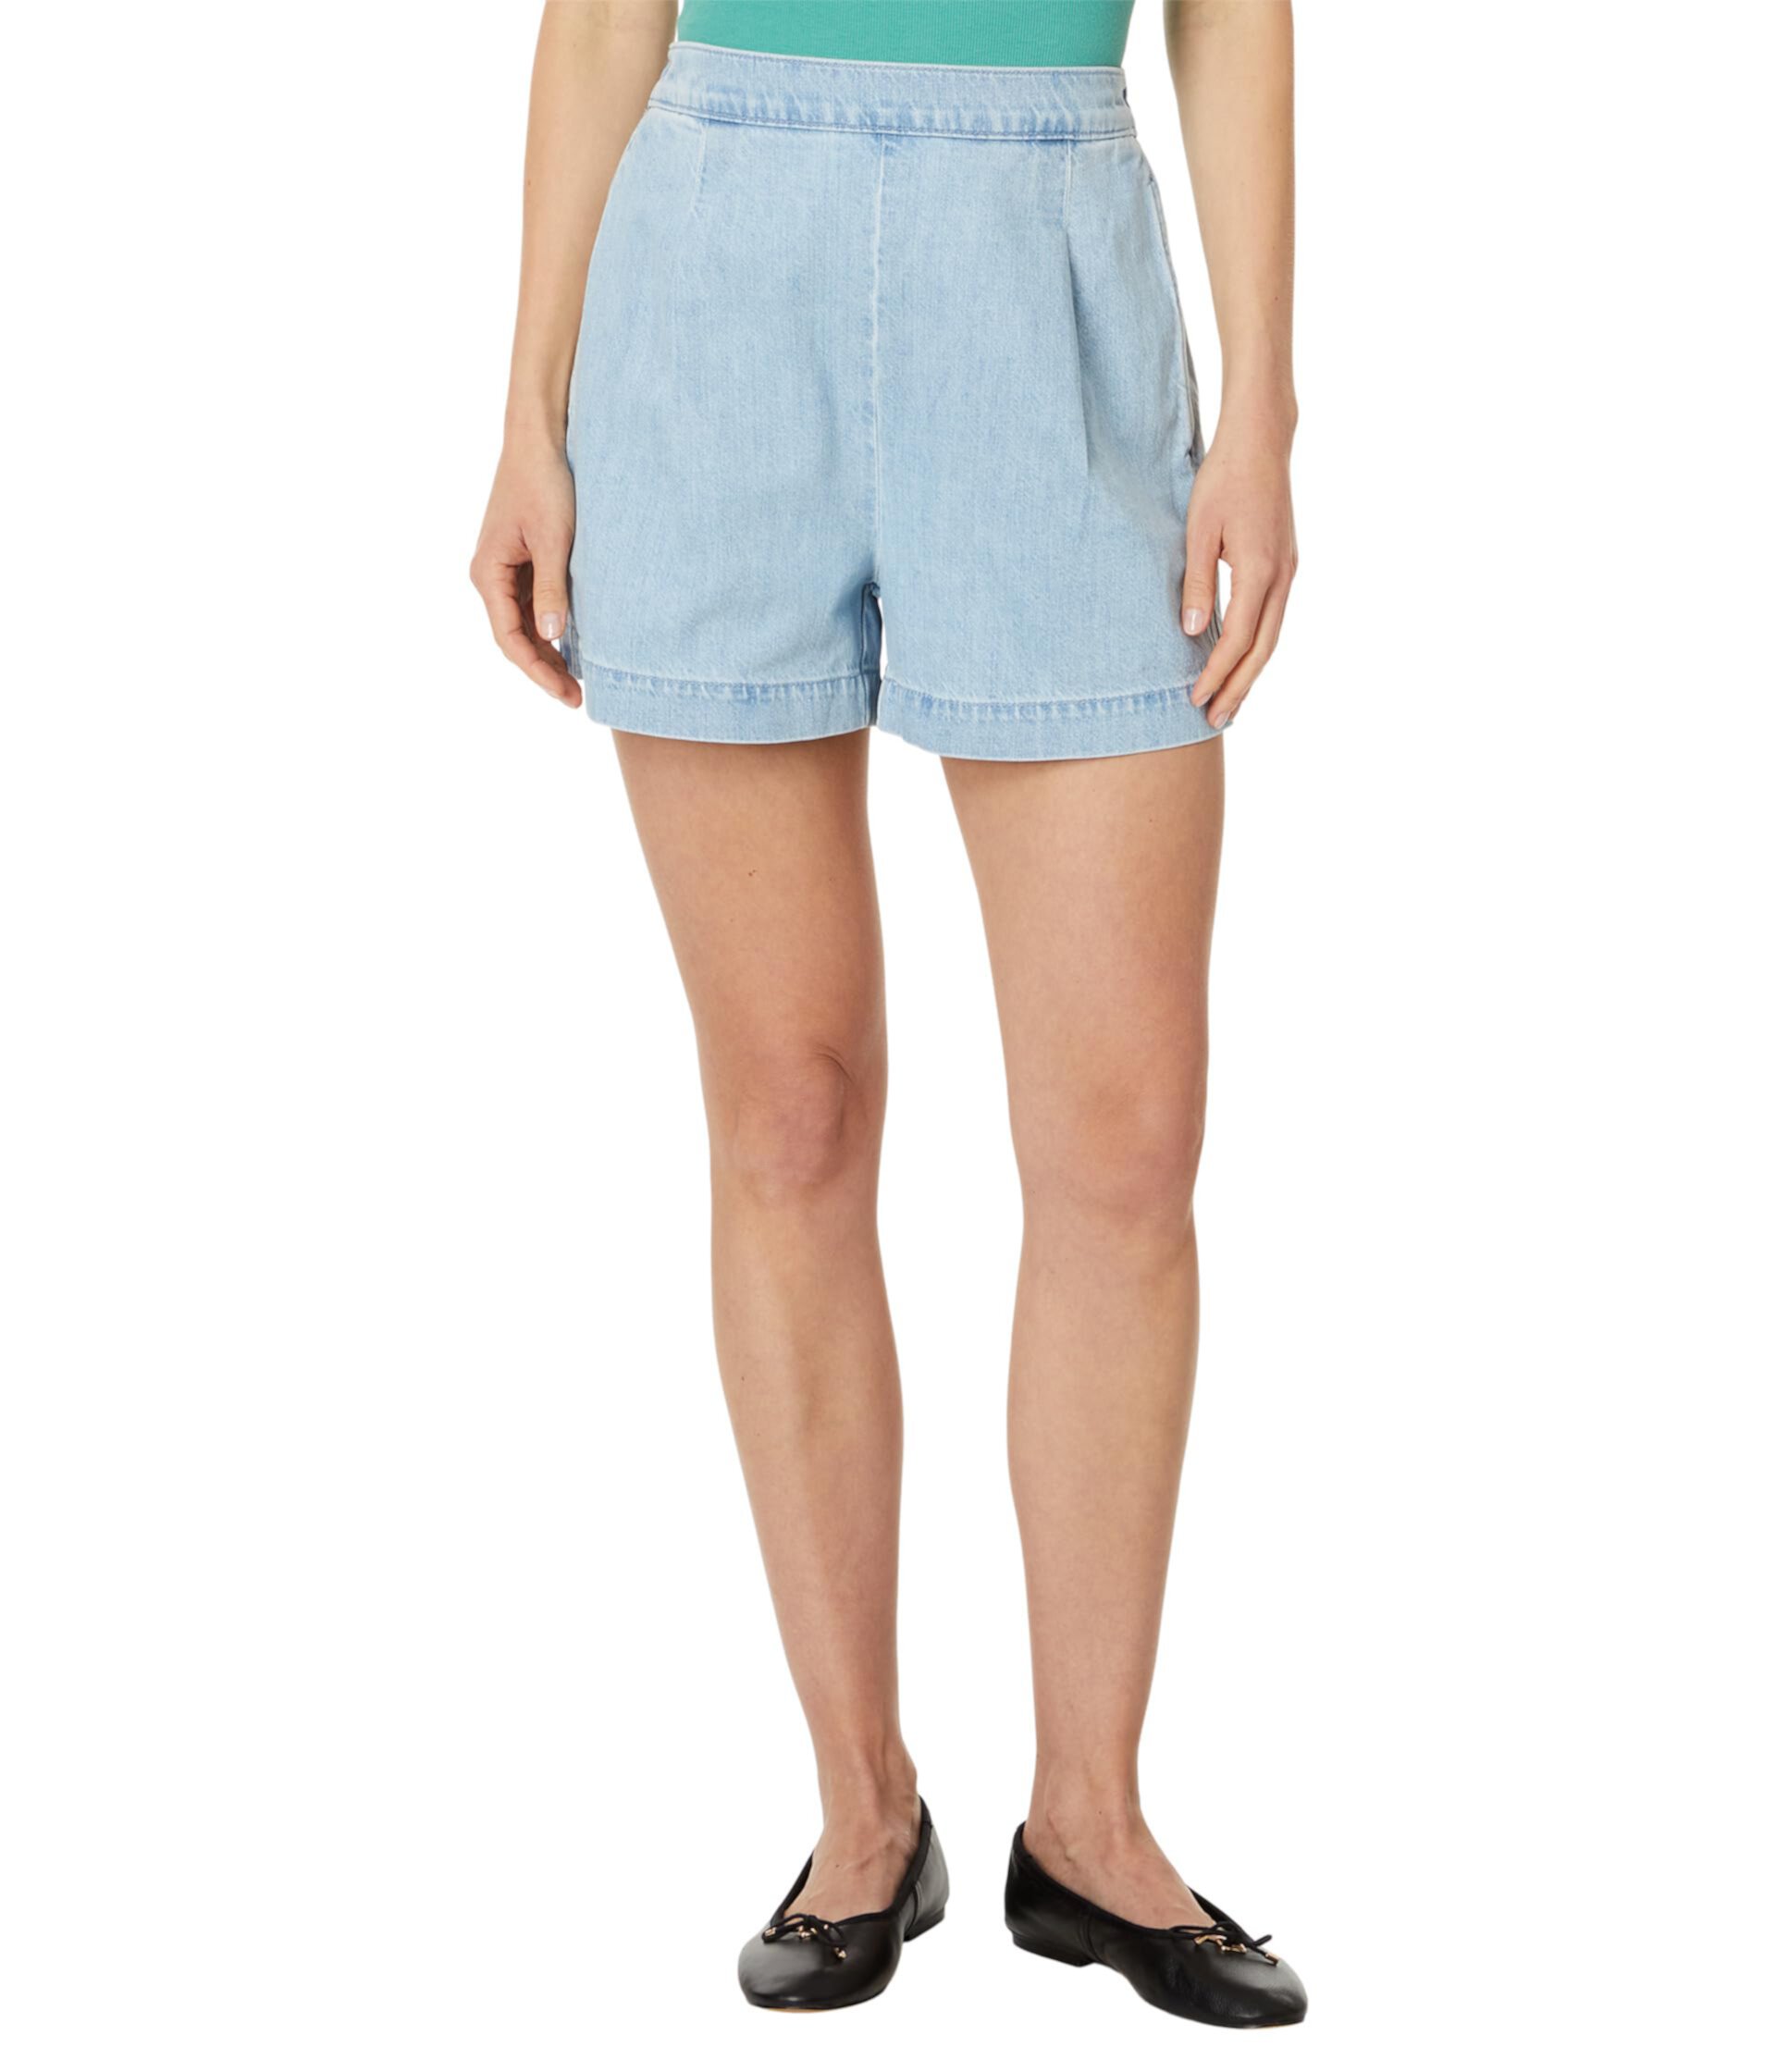 Clean Denim Pull-On Shorts in Palmwood Wash Madewell